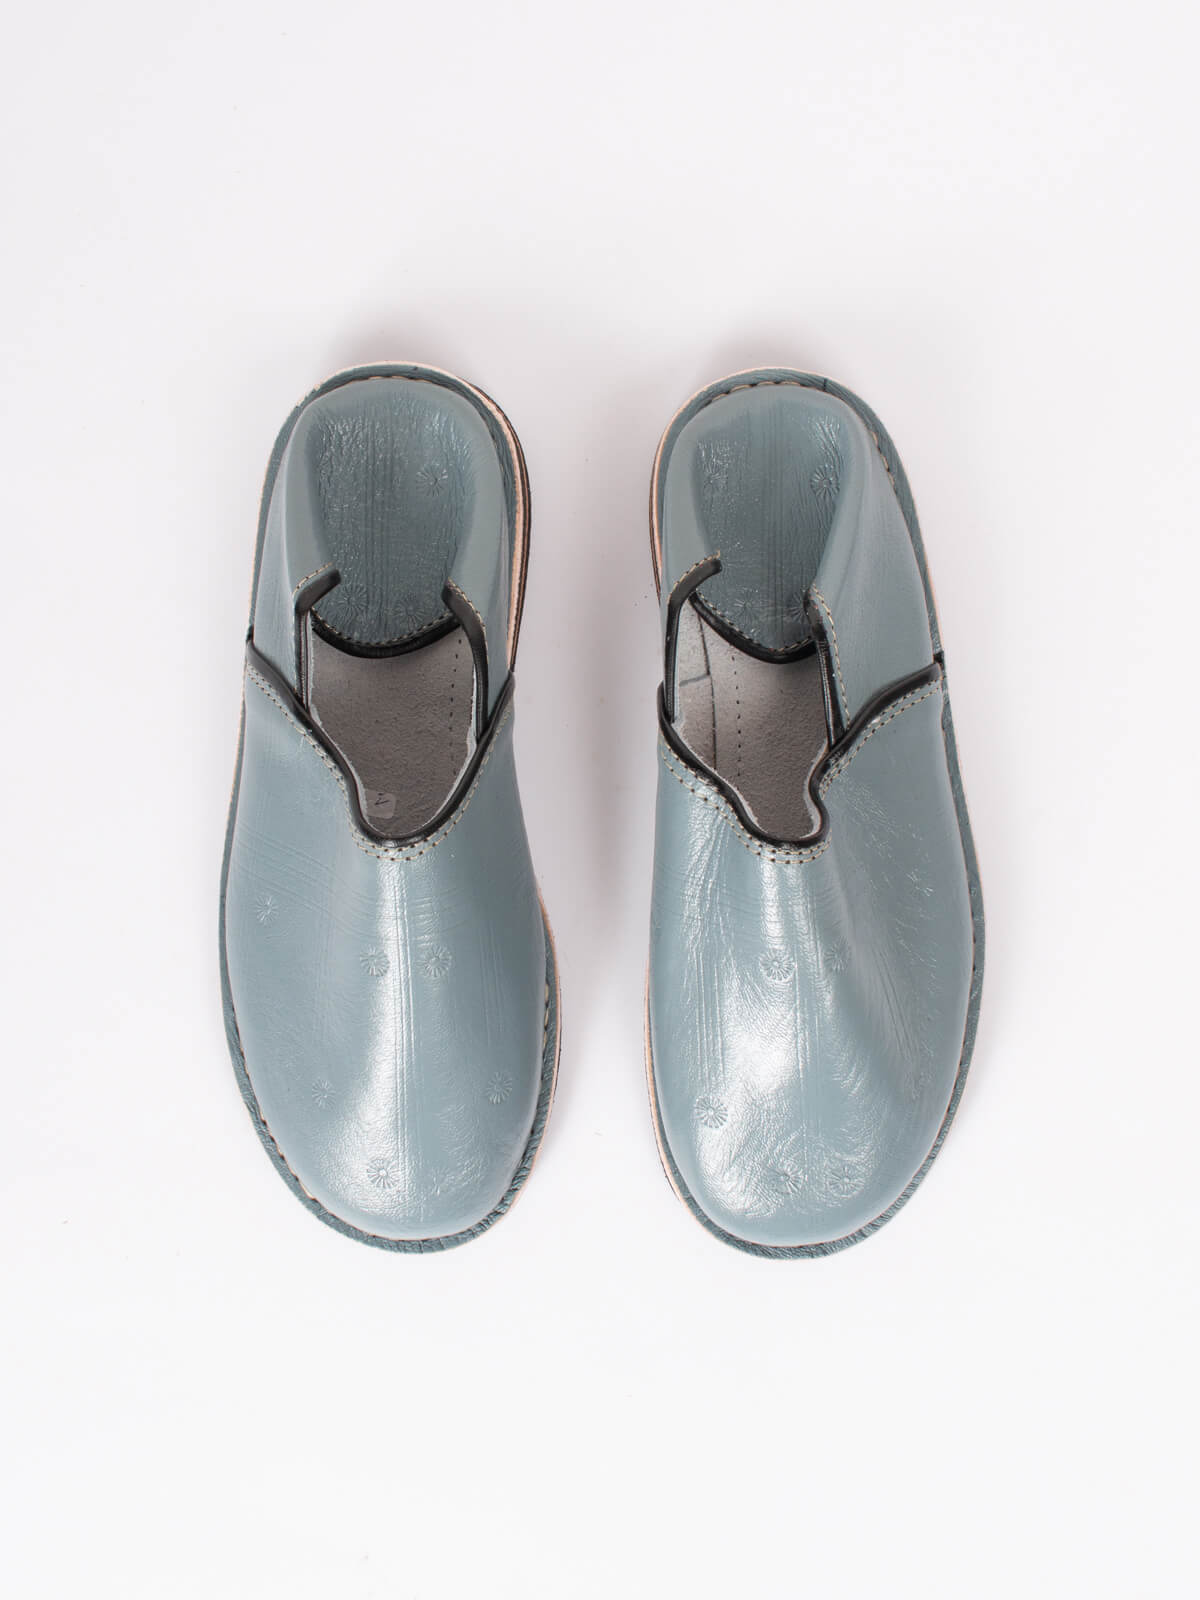 Moroccan Berber Babouche Slippers, Slate Grey